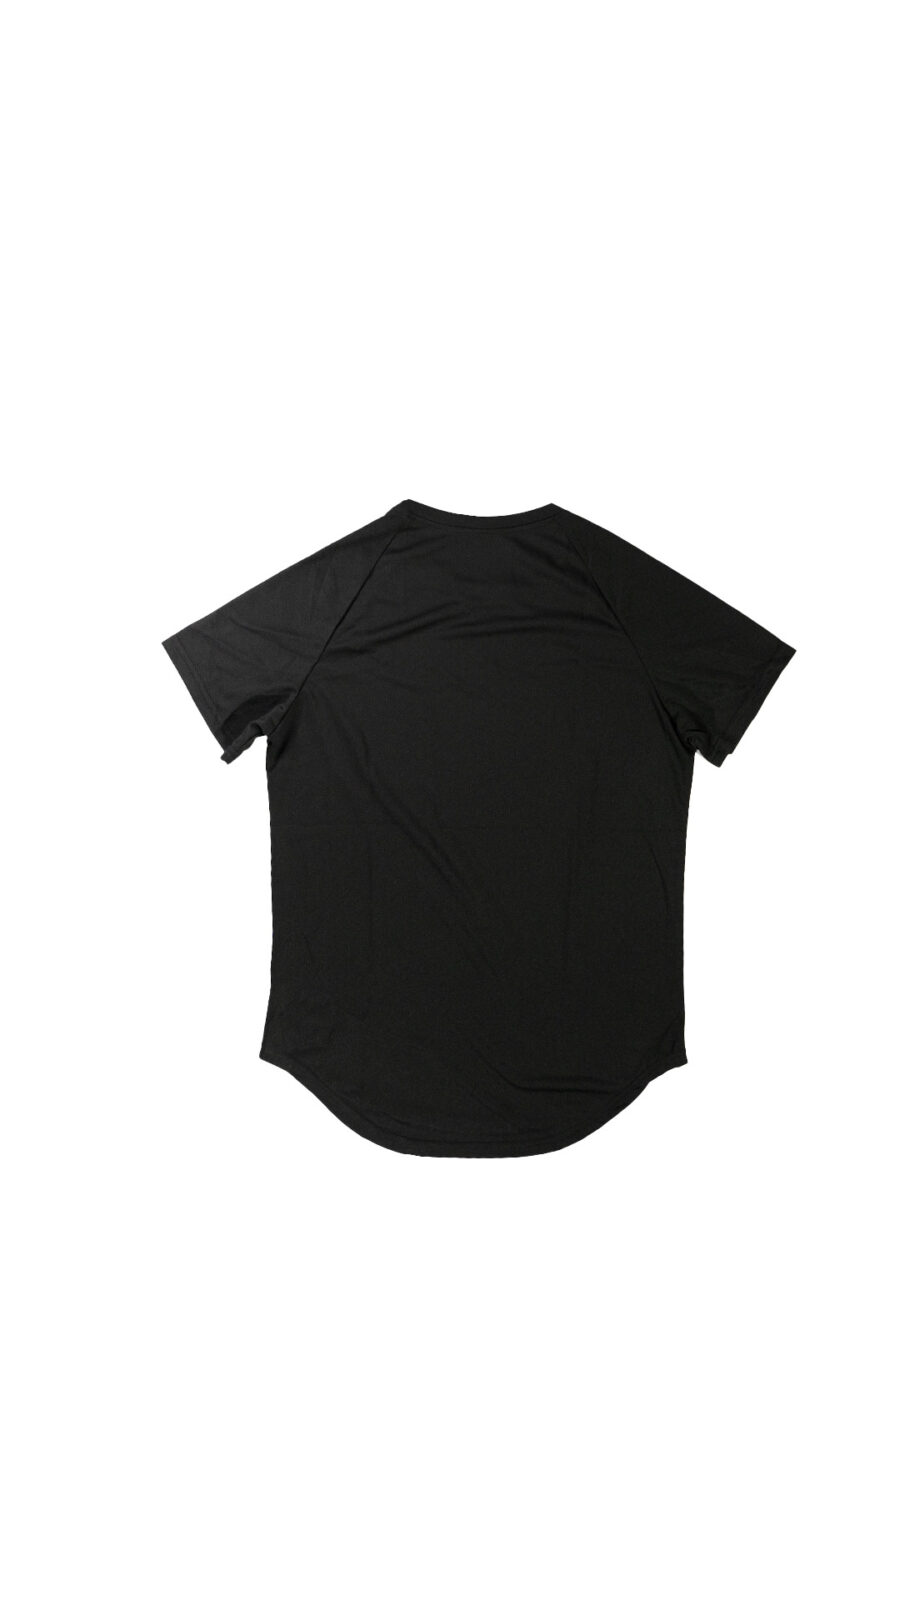 tee-shirt polyester sport homme noir perforé